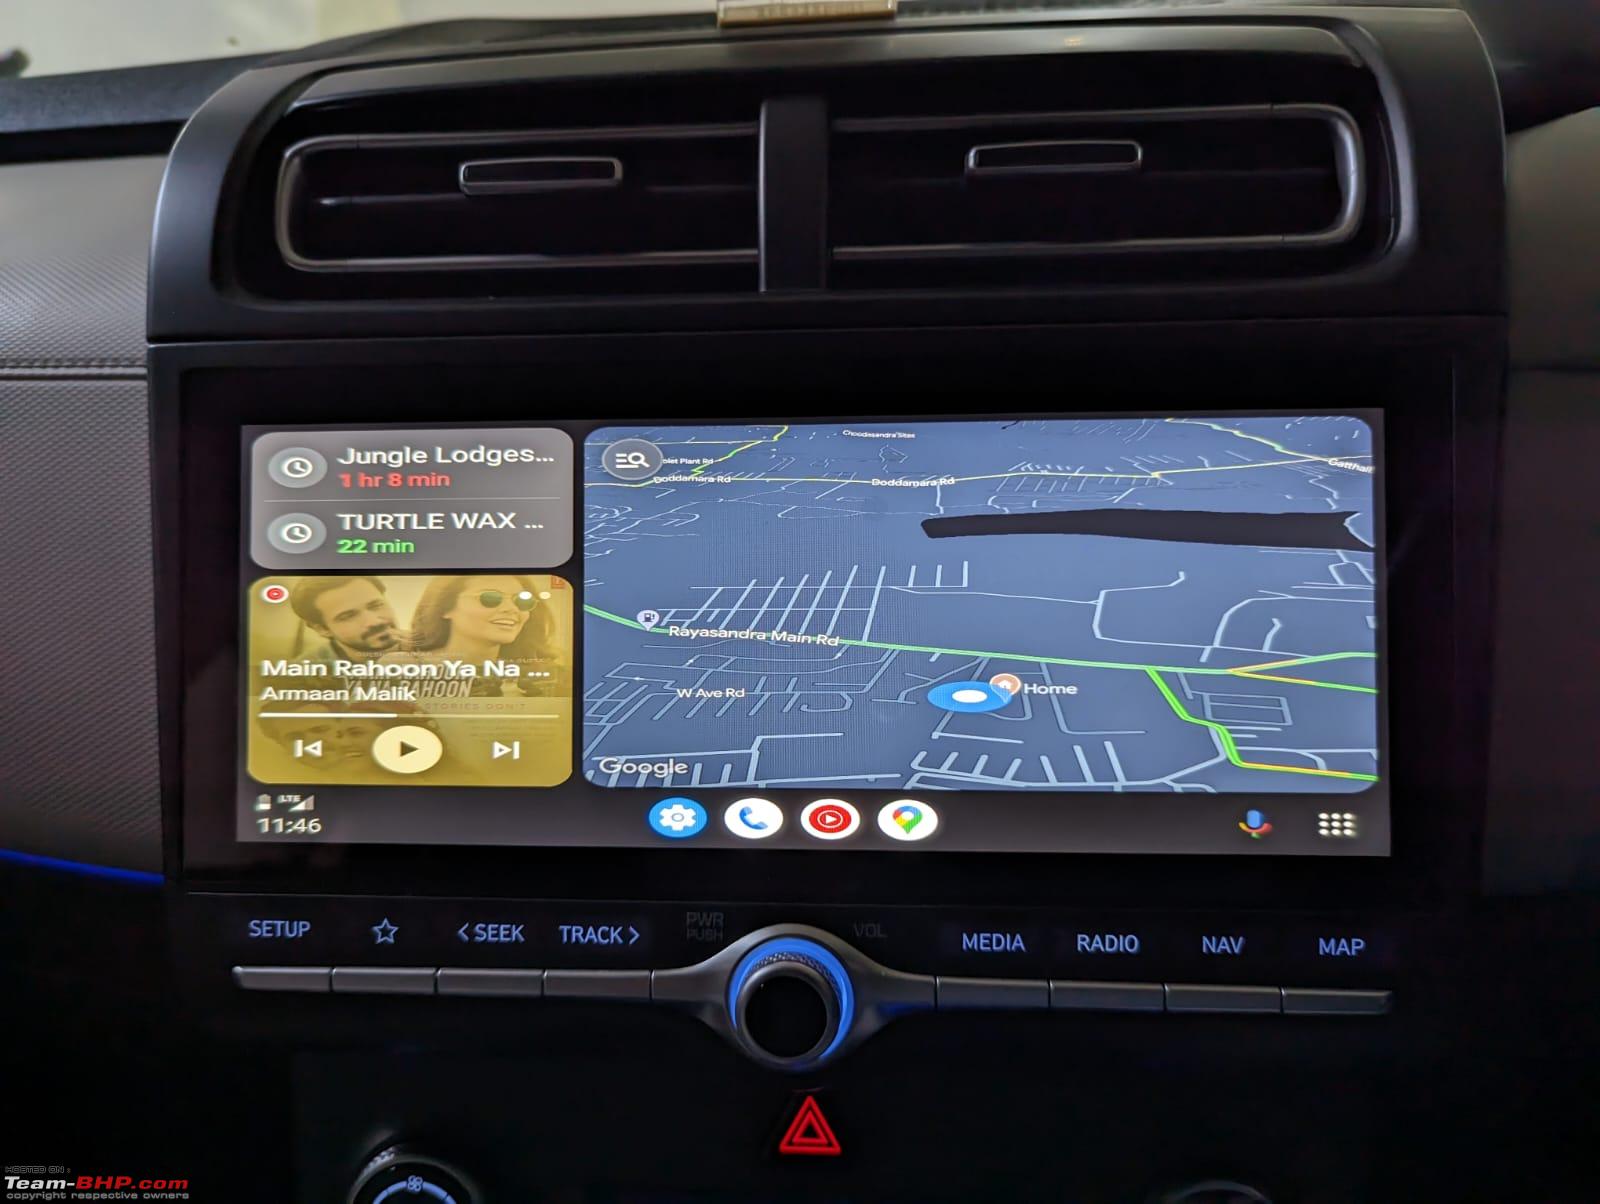 Carlinkit 4.0 CarPlay Android Auto Wireless Adapter